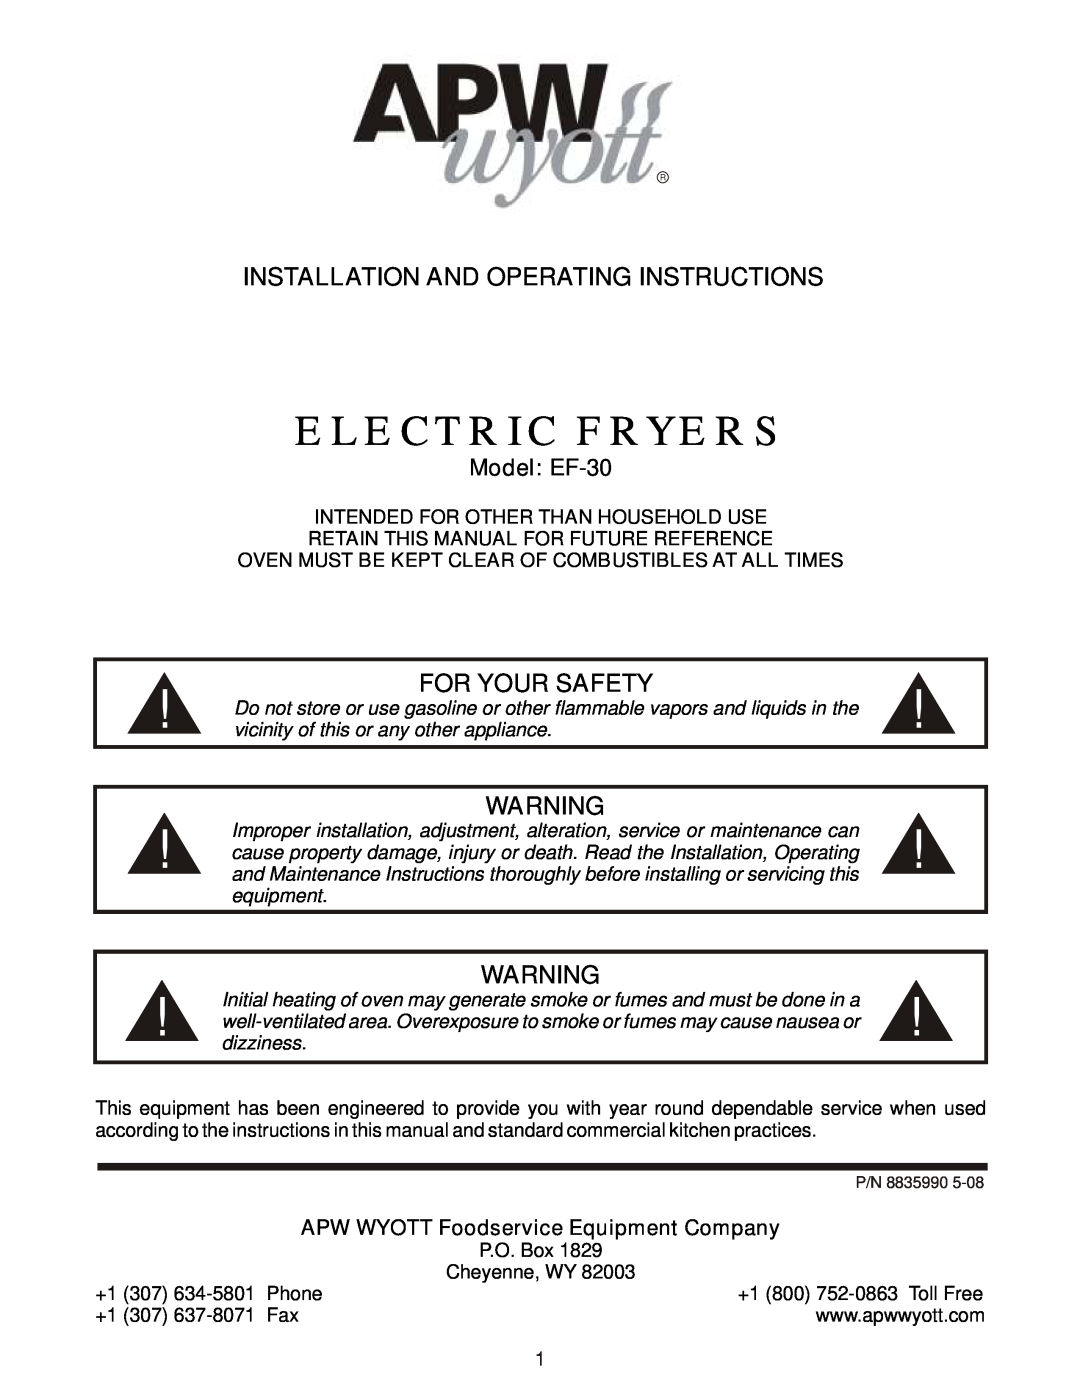 APW Wyott EF-30 operating instructions Installation And Operating Instructions, For Your Safety, Electric Fryers 